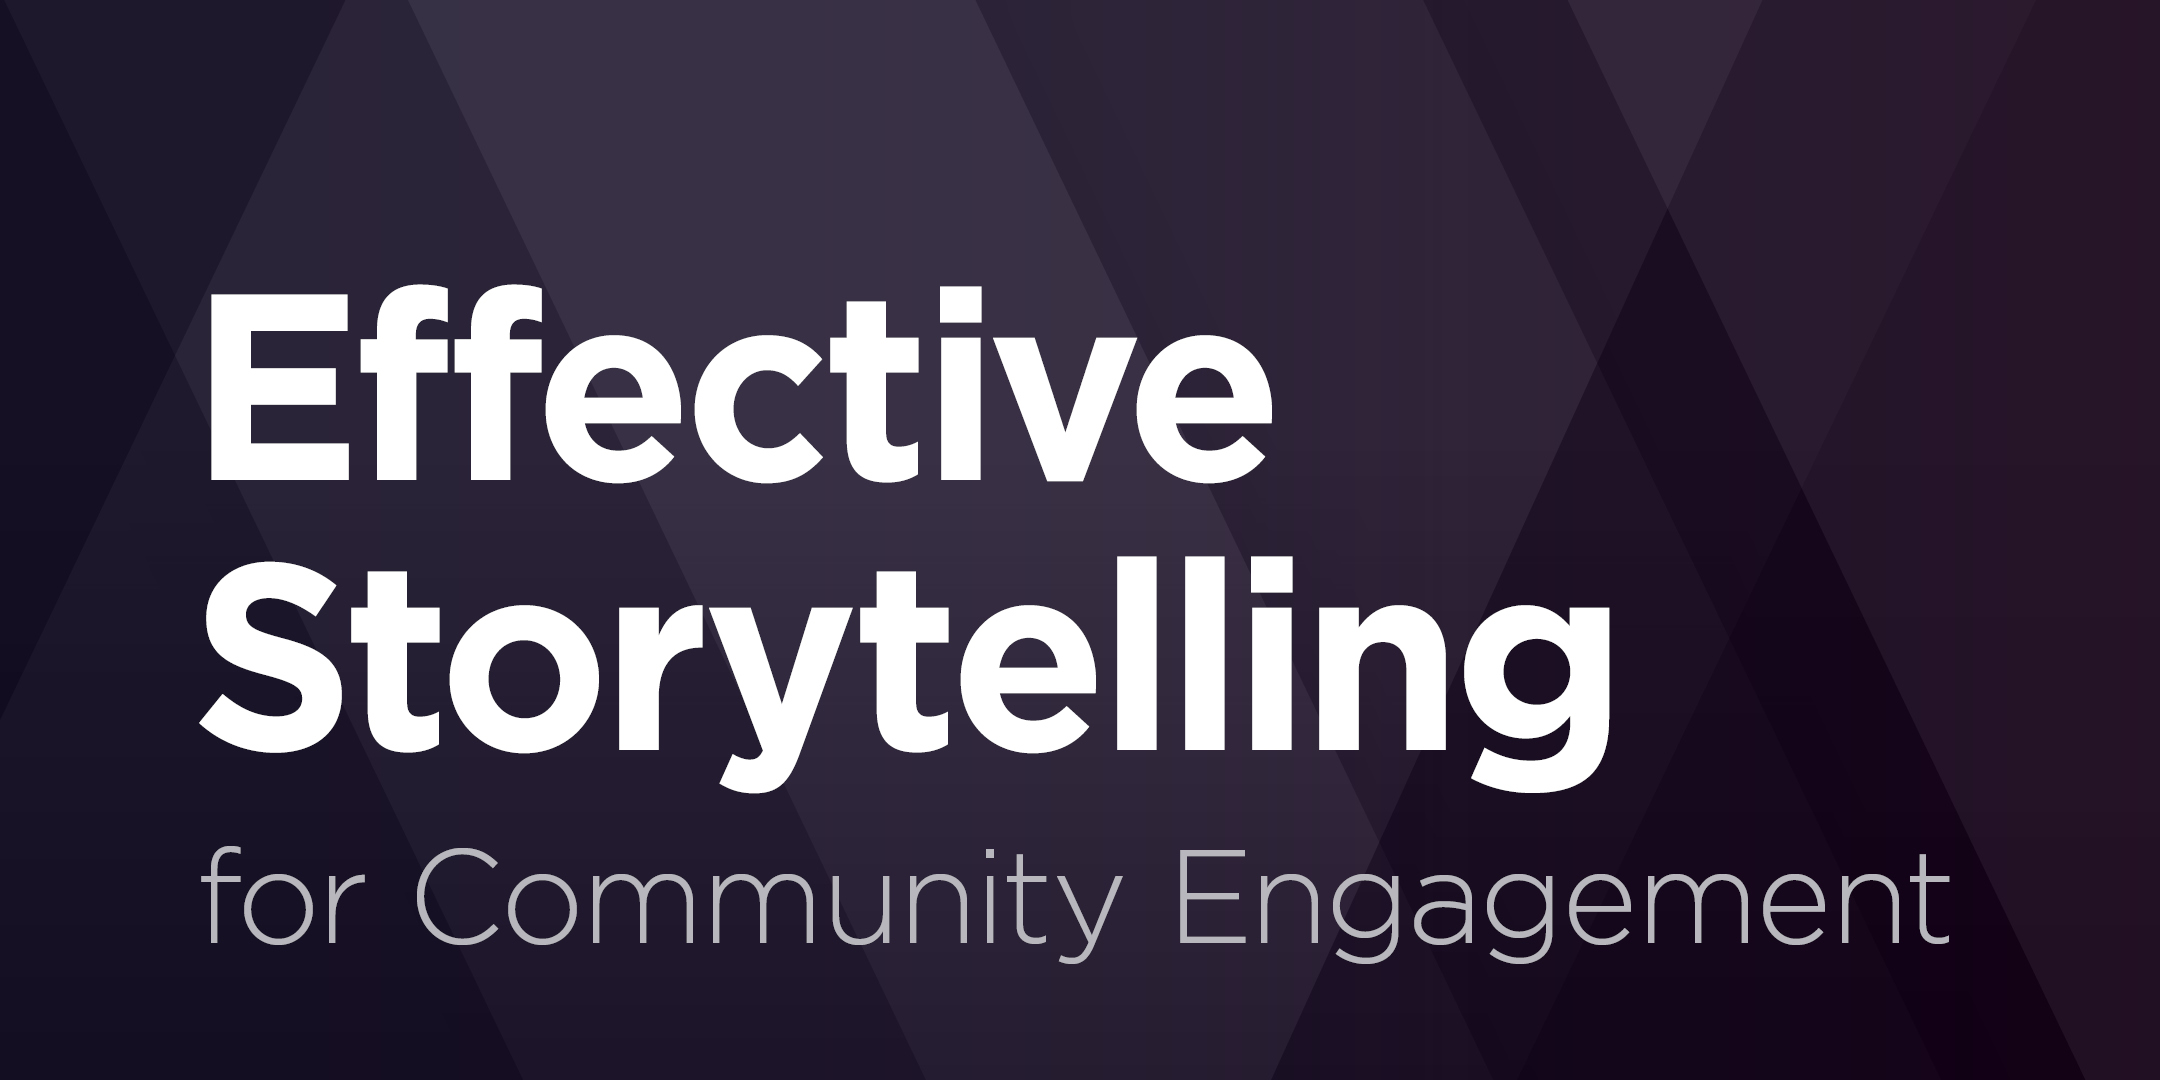 Effective Storytelling for Community Engagement